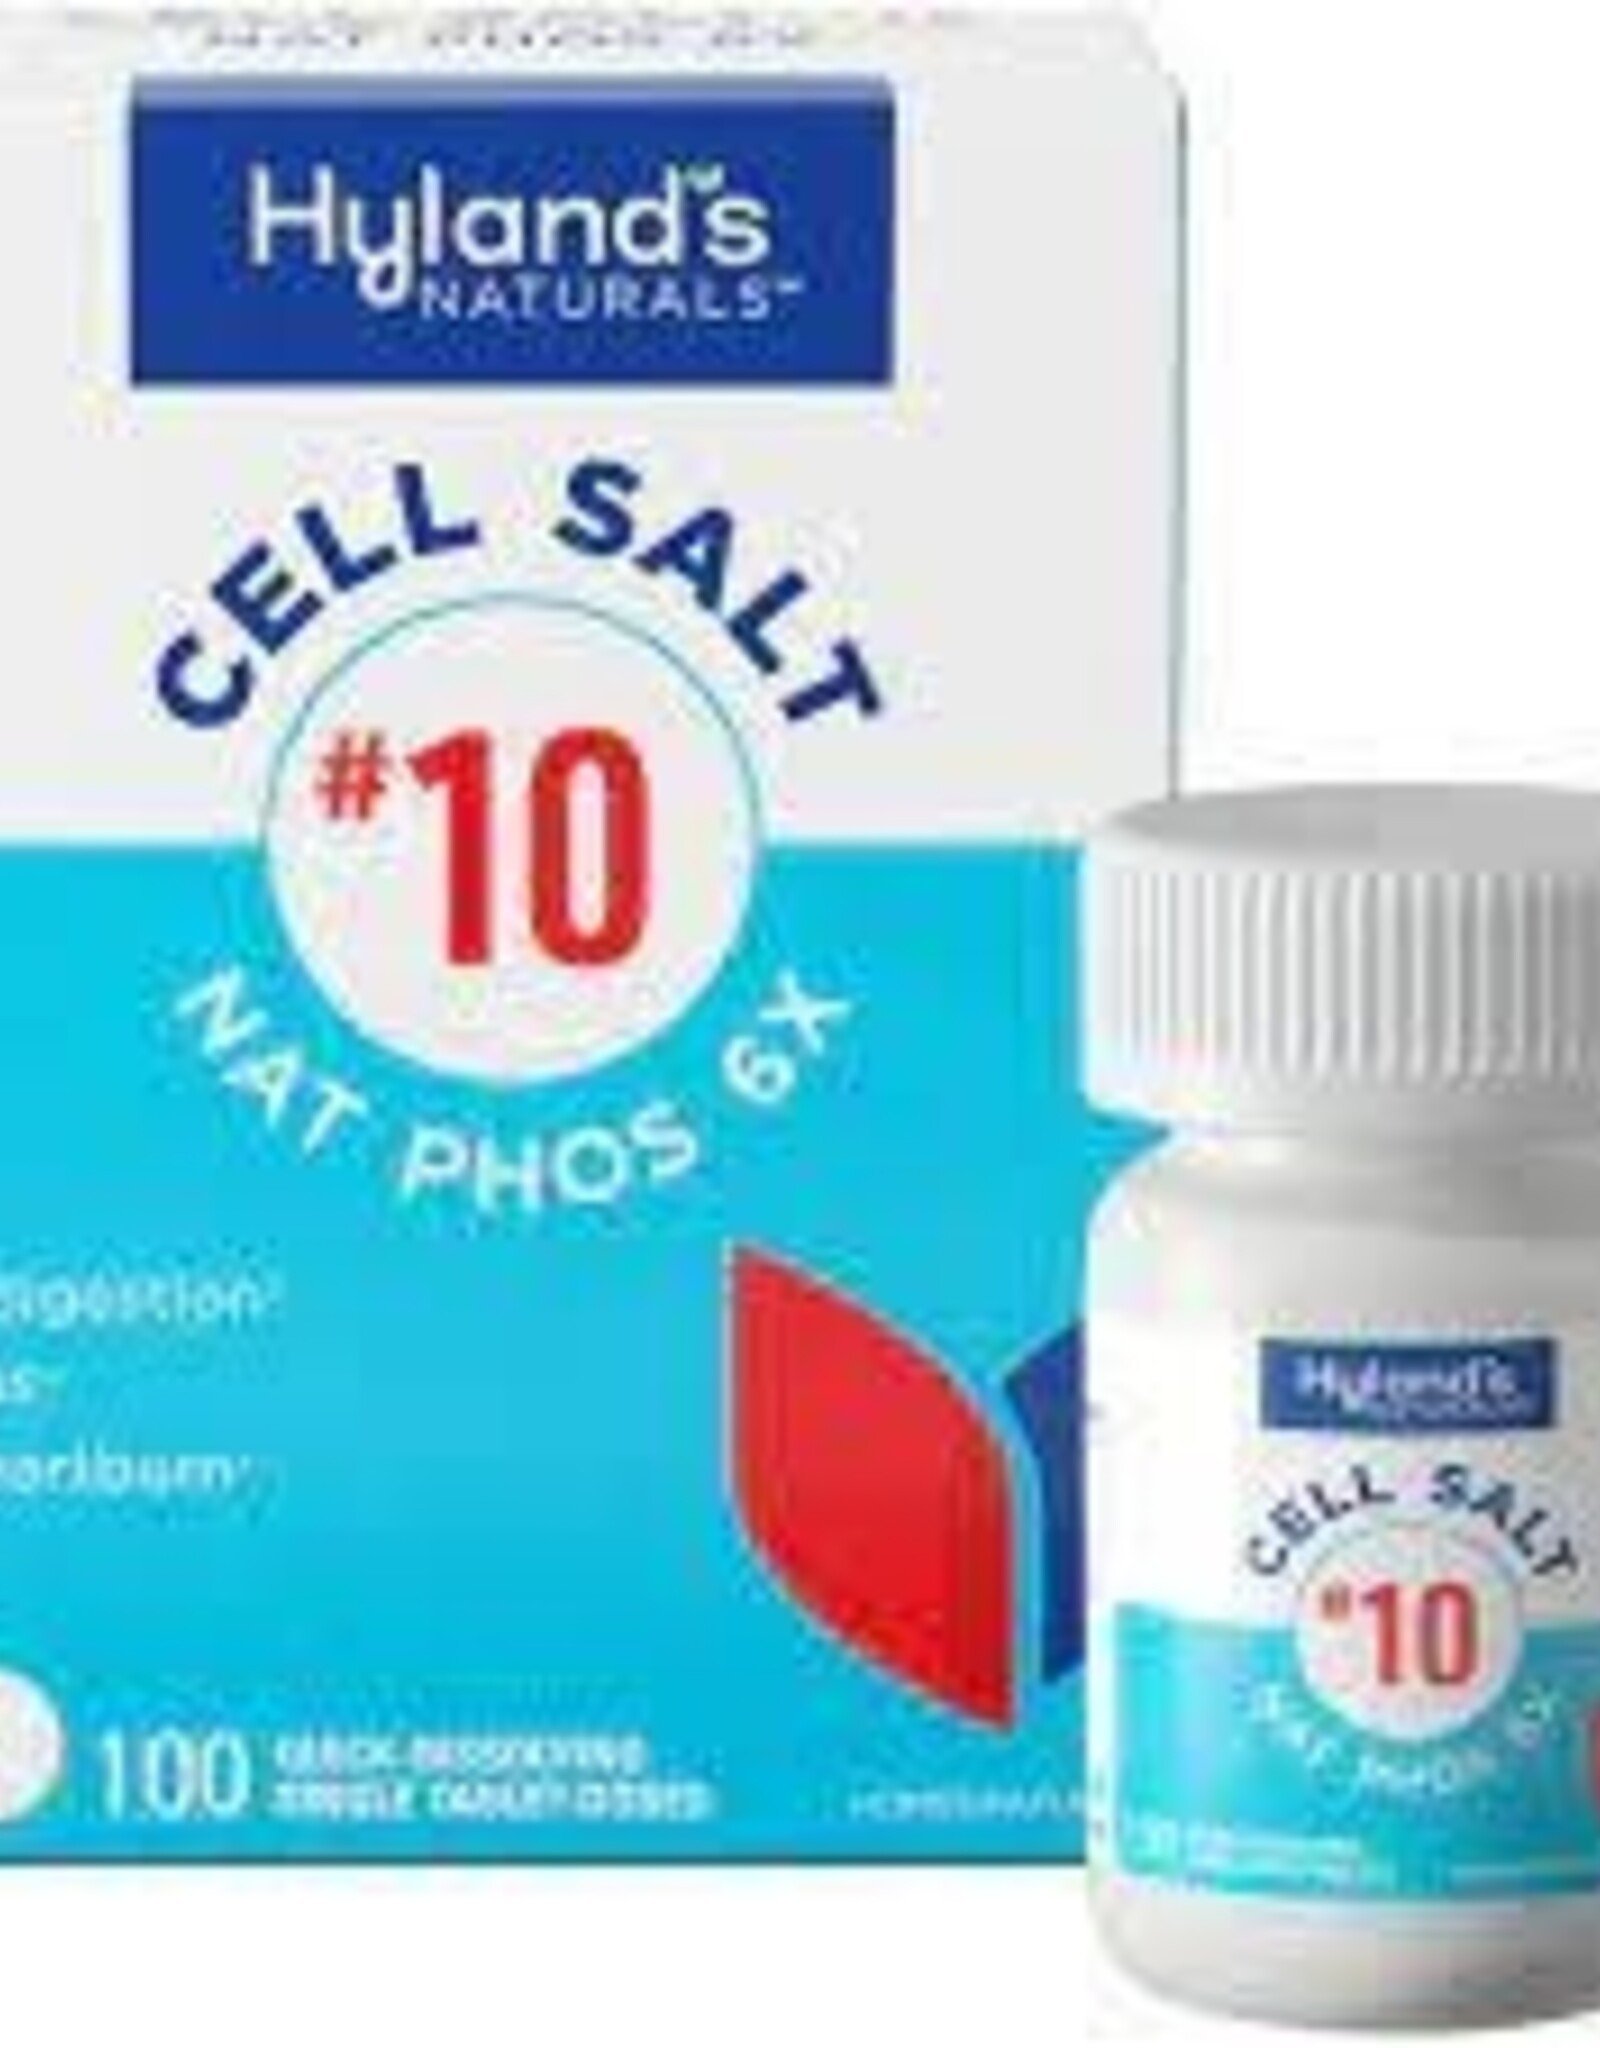 Hyland's Hyland's Cell Salts - 100 tablet #10 Natrum Phos